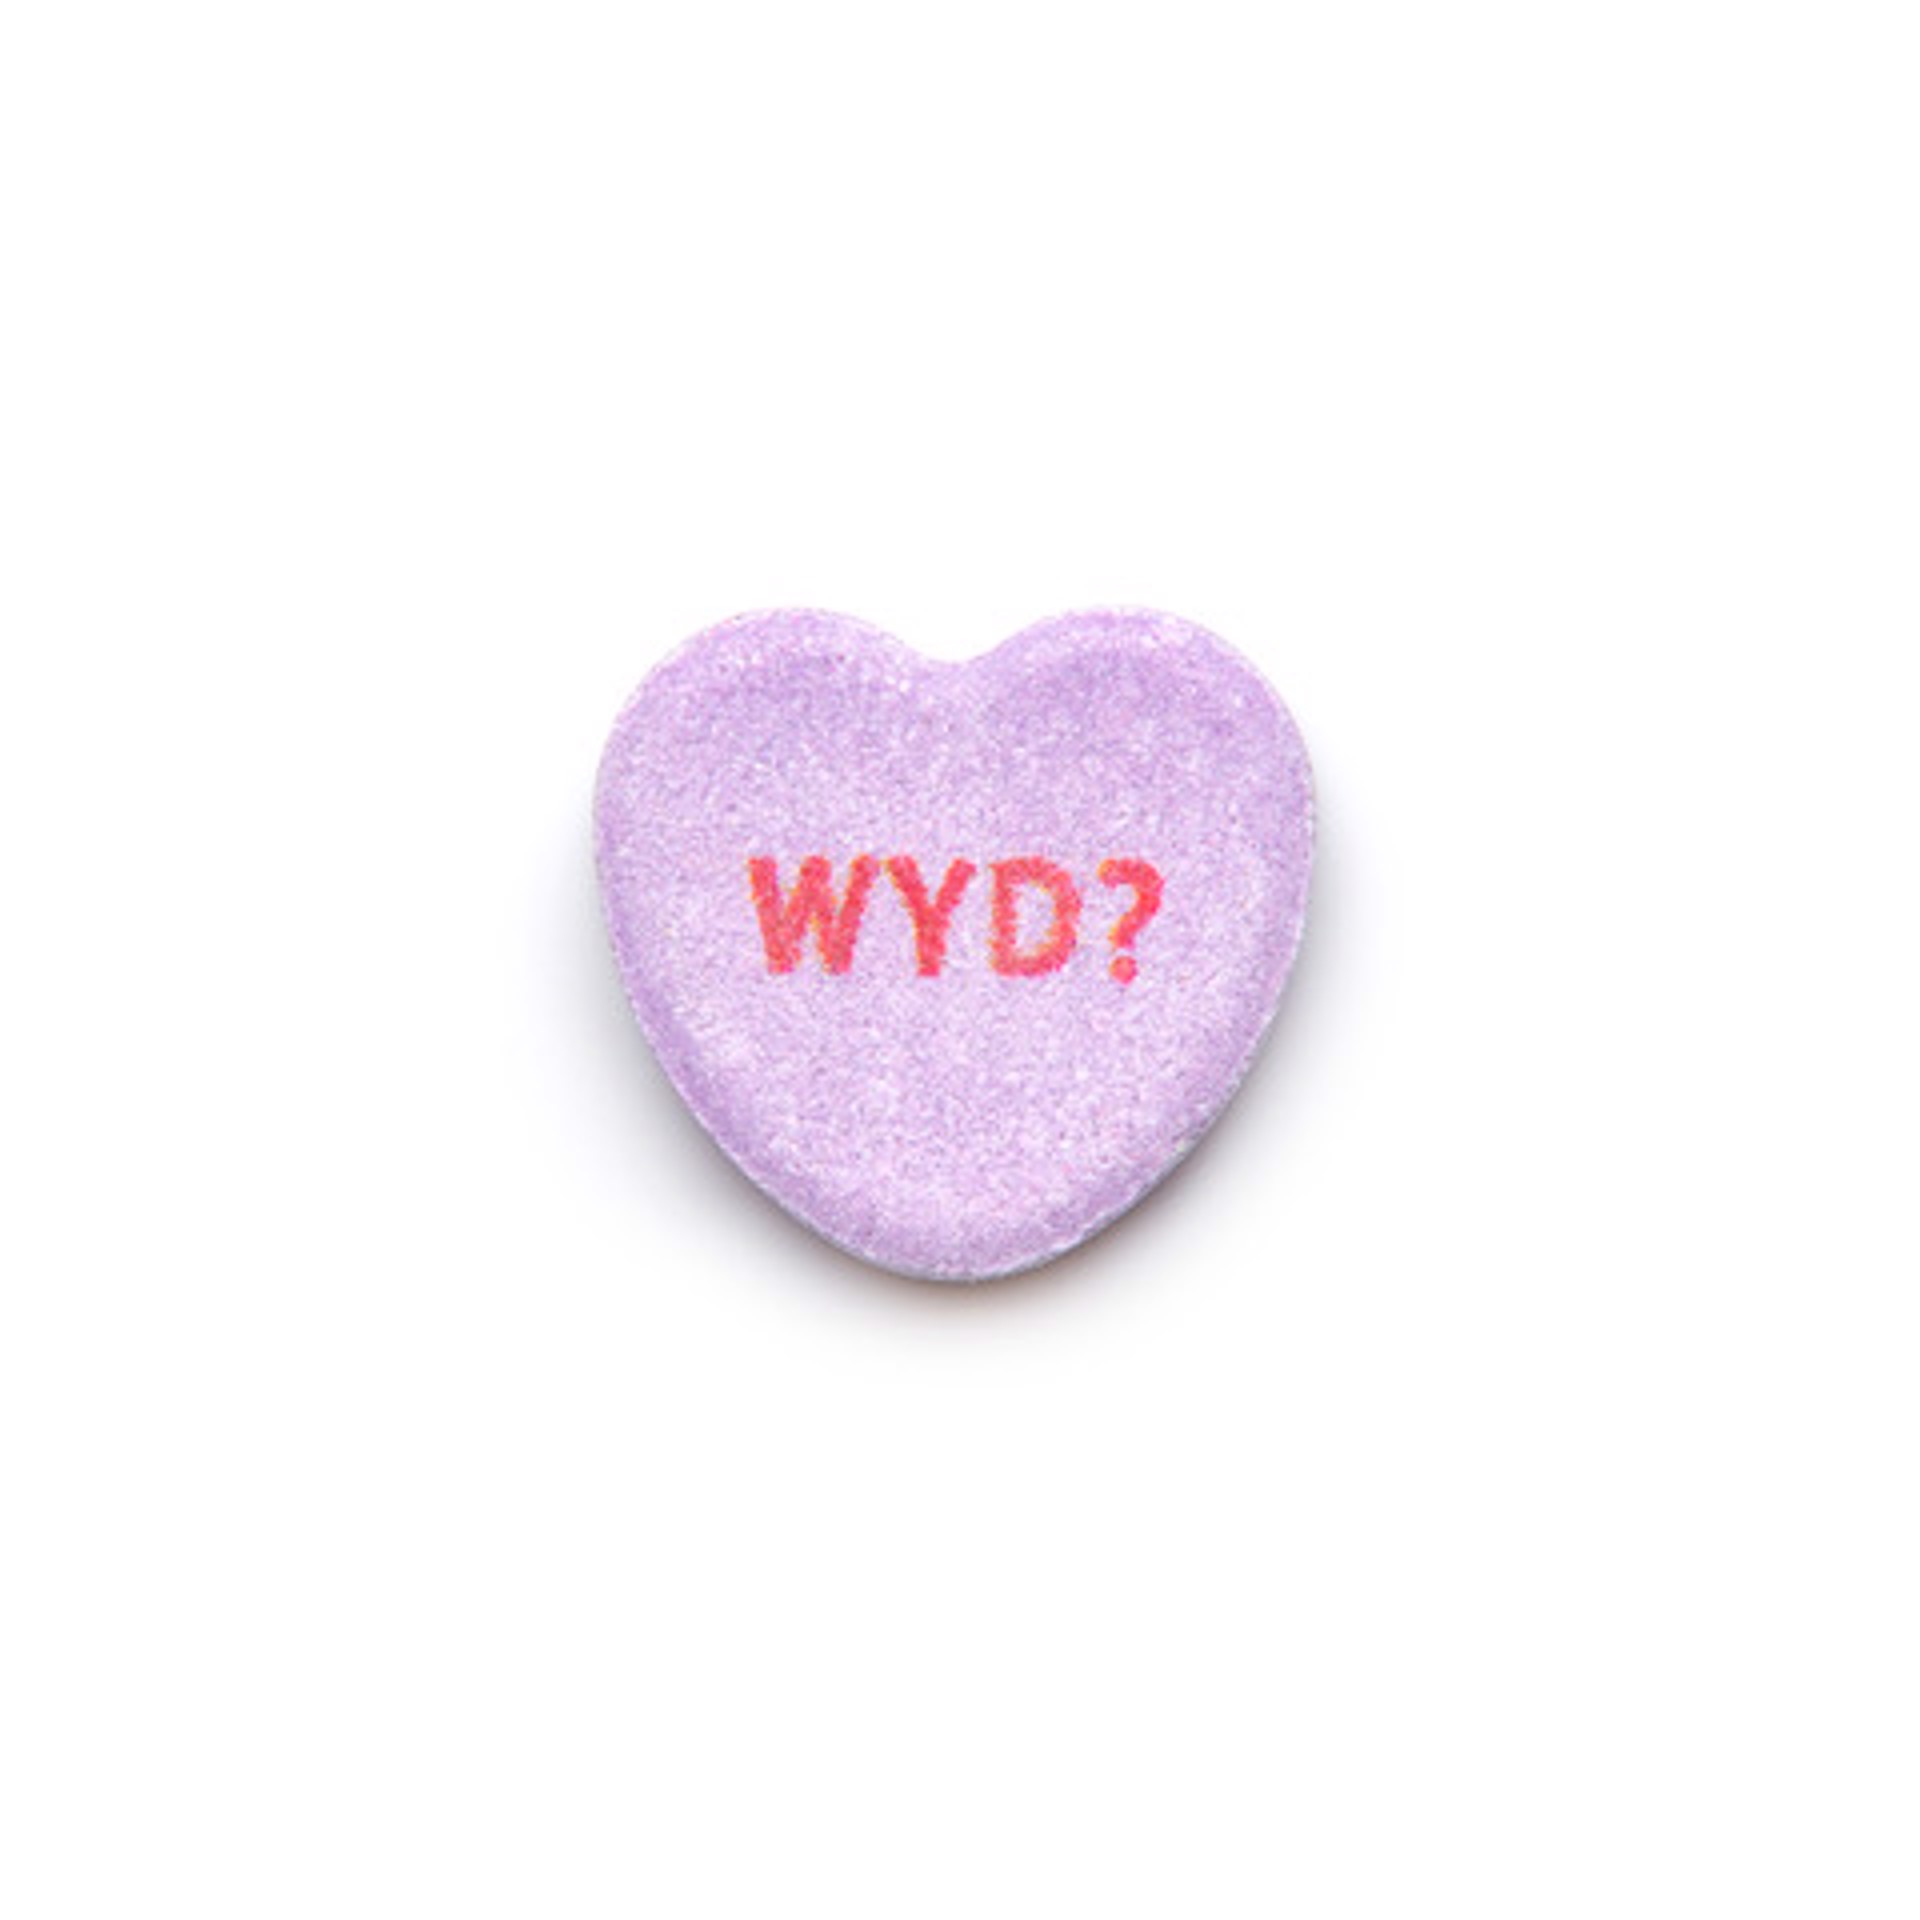 WYD? by Peter Andrew Lusztyk / Refined Sugar